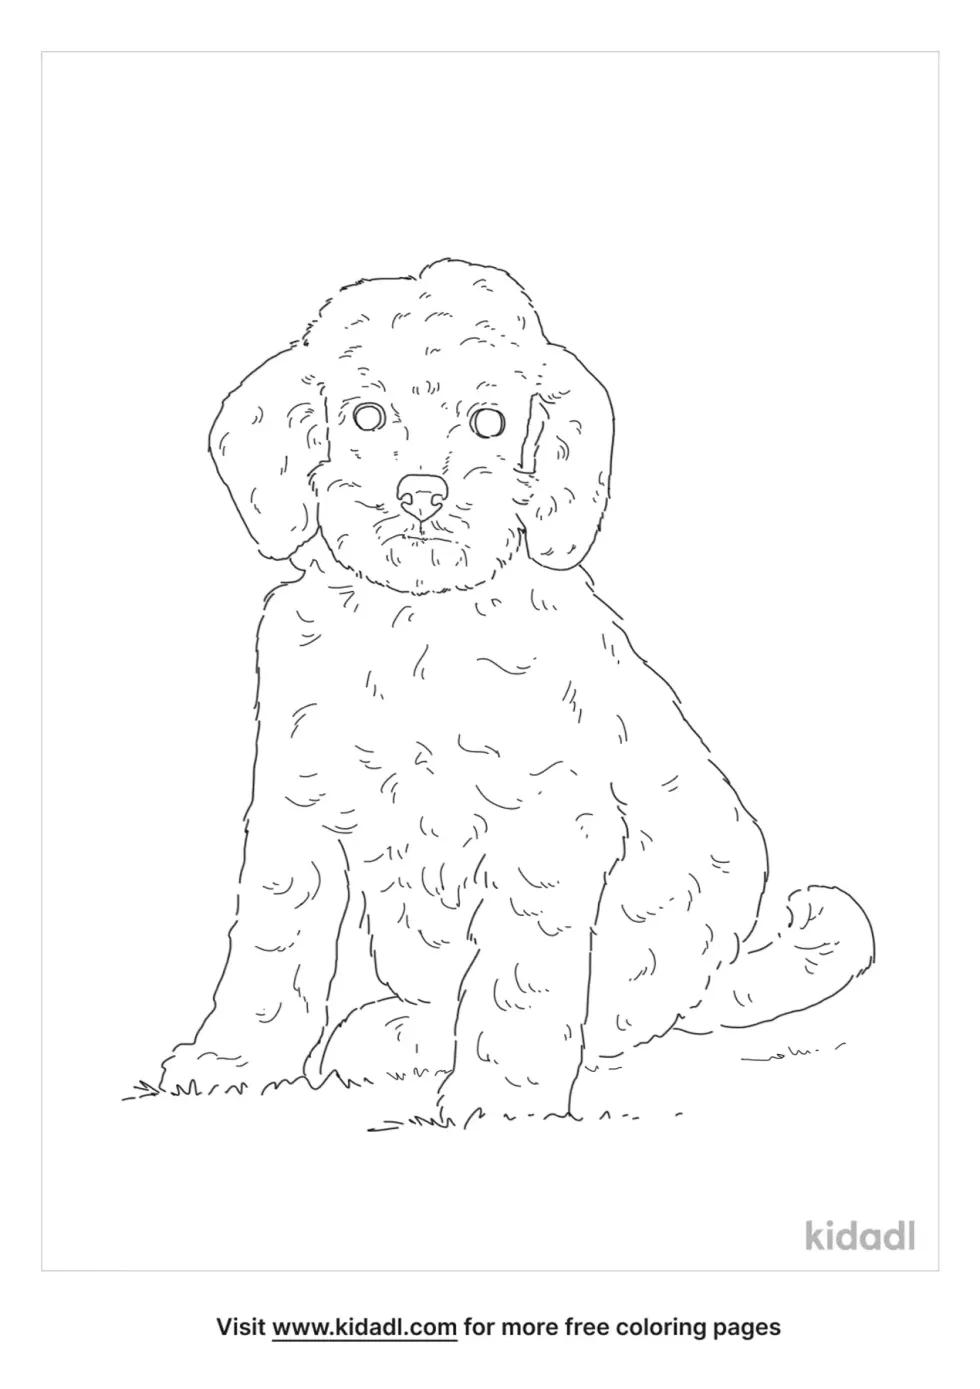 Teacup Poodle Coloring Page